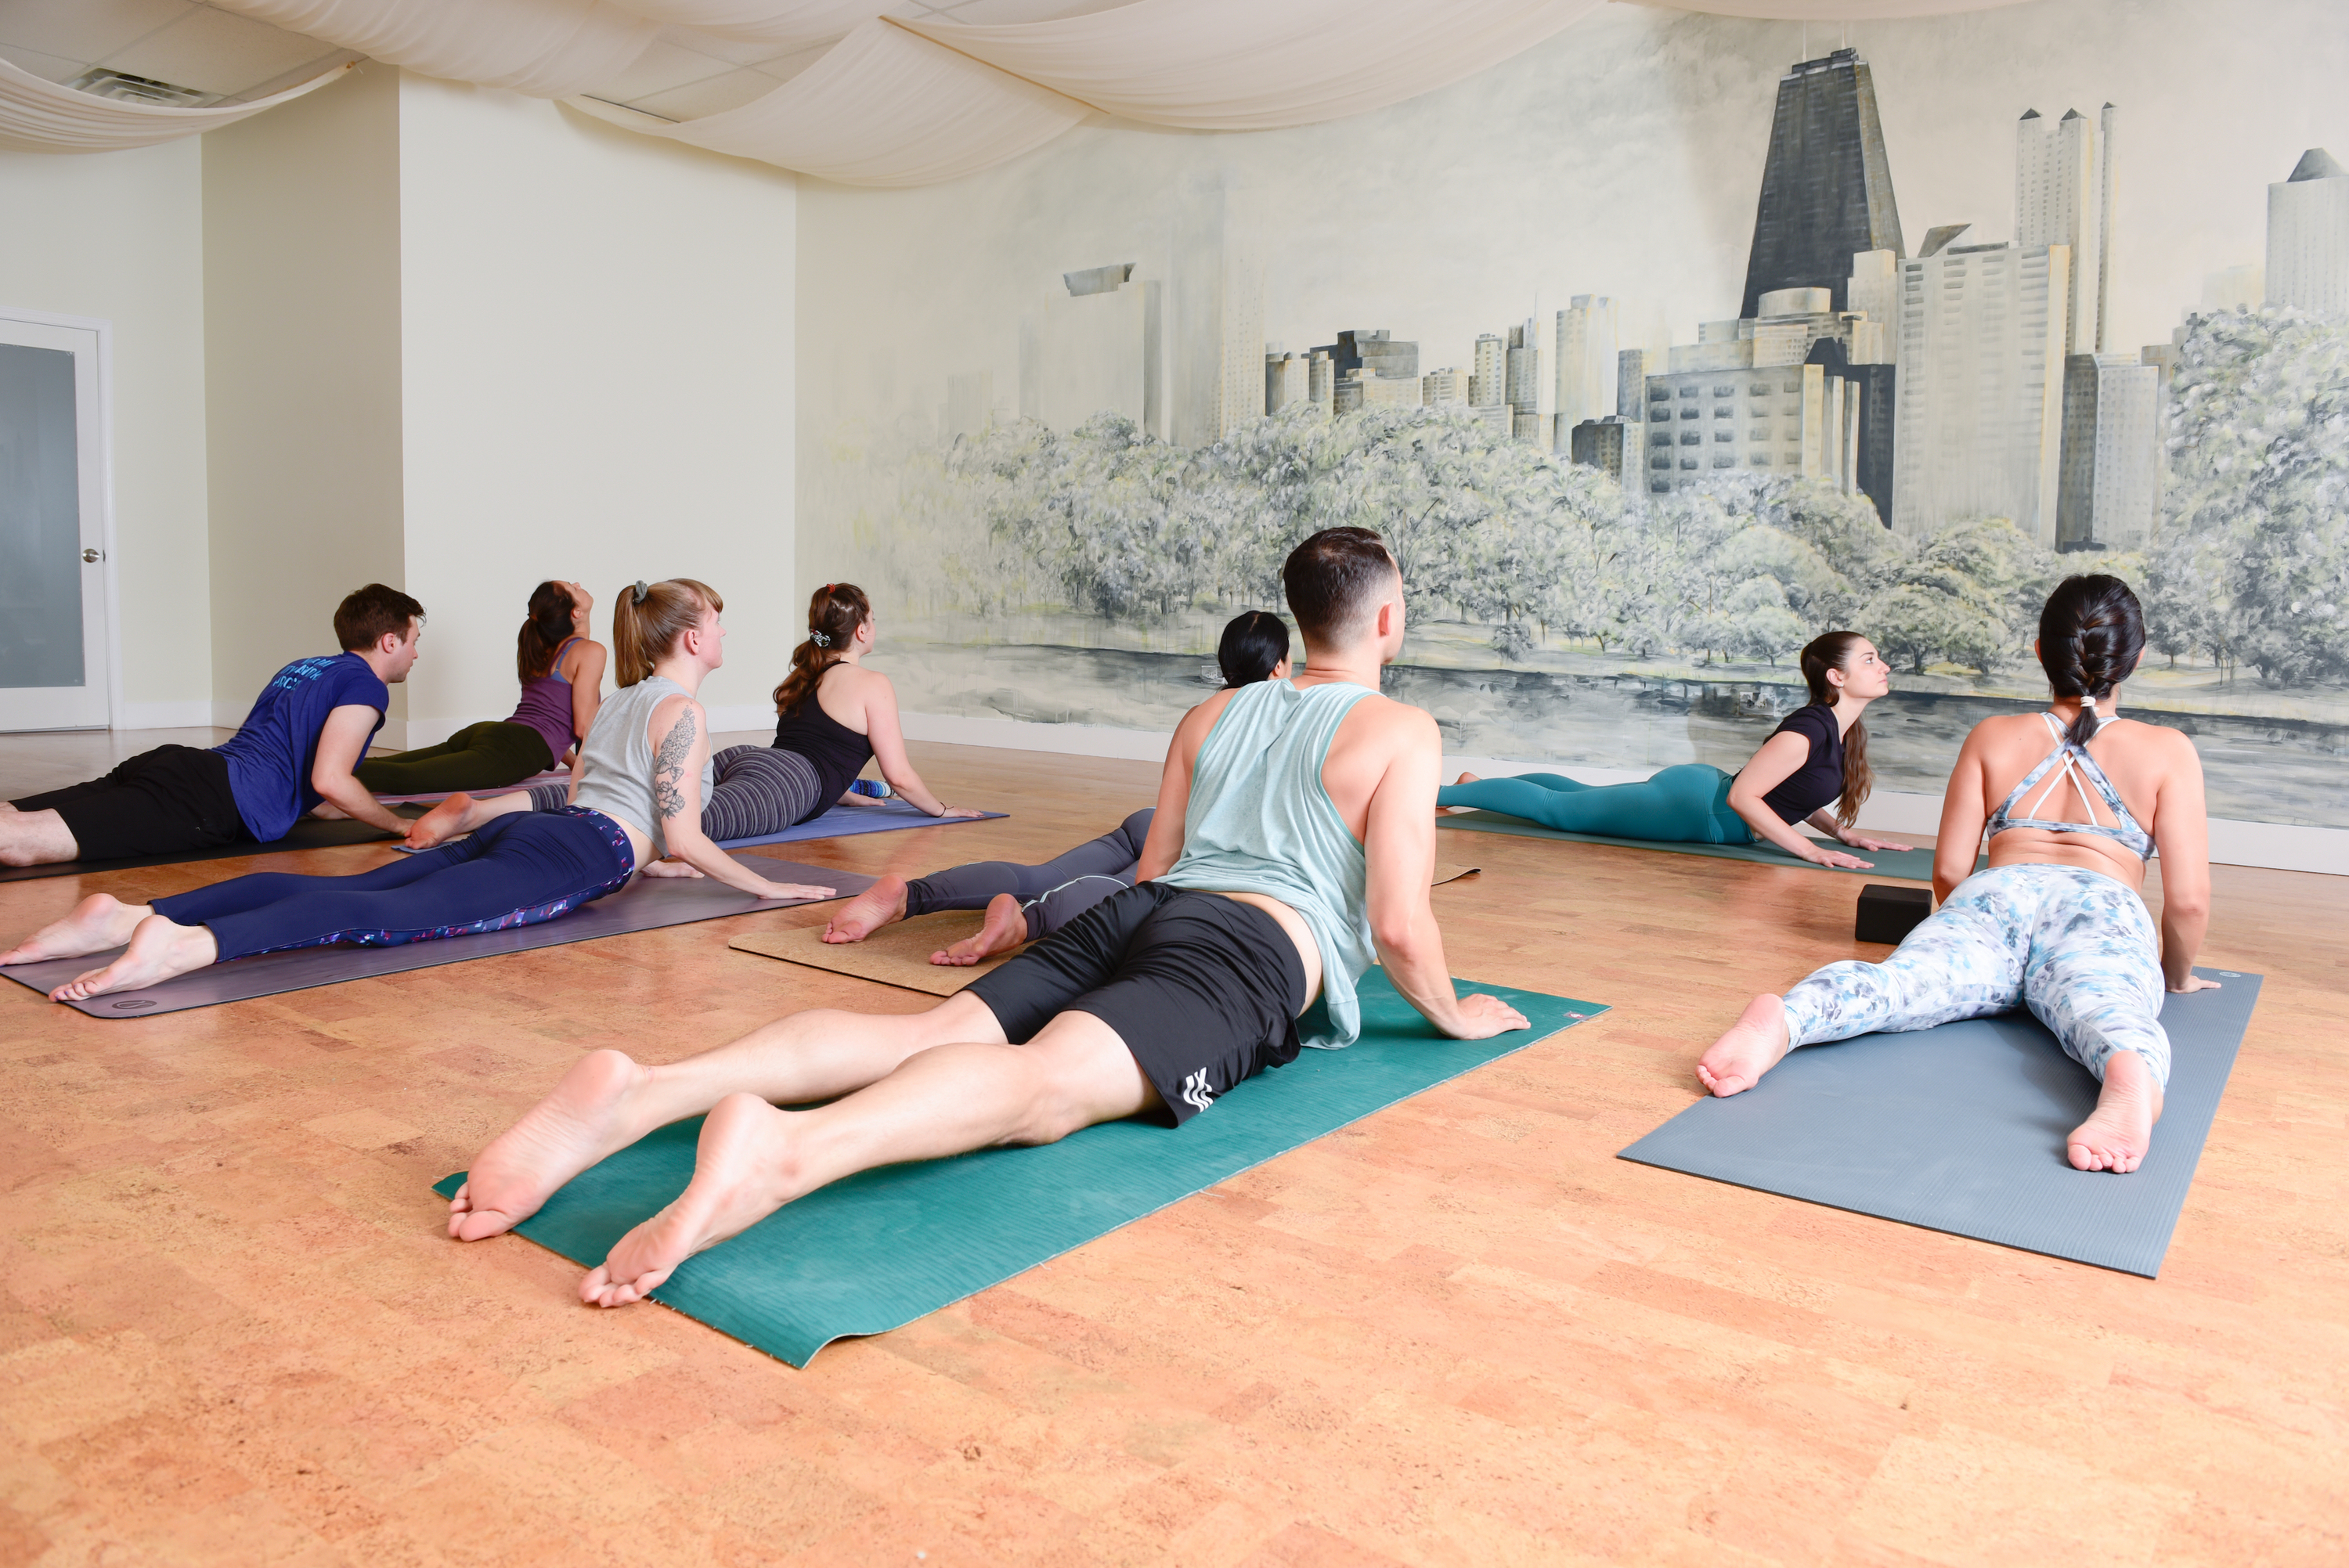 Discover Hot Yoga Academy - Become a yoga teacher in Barcelona